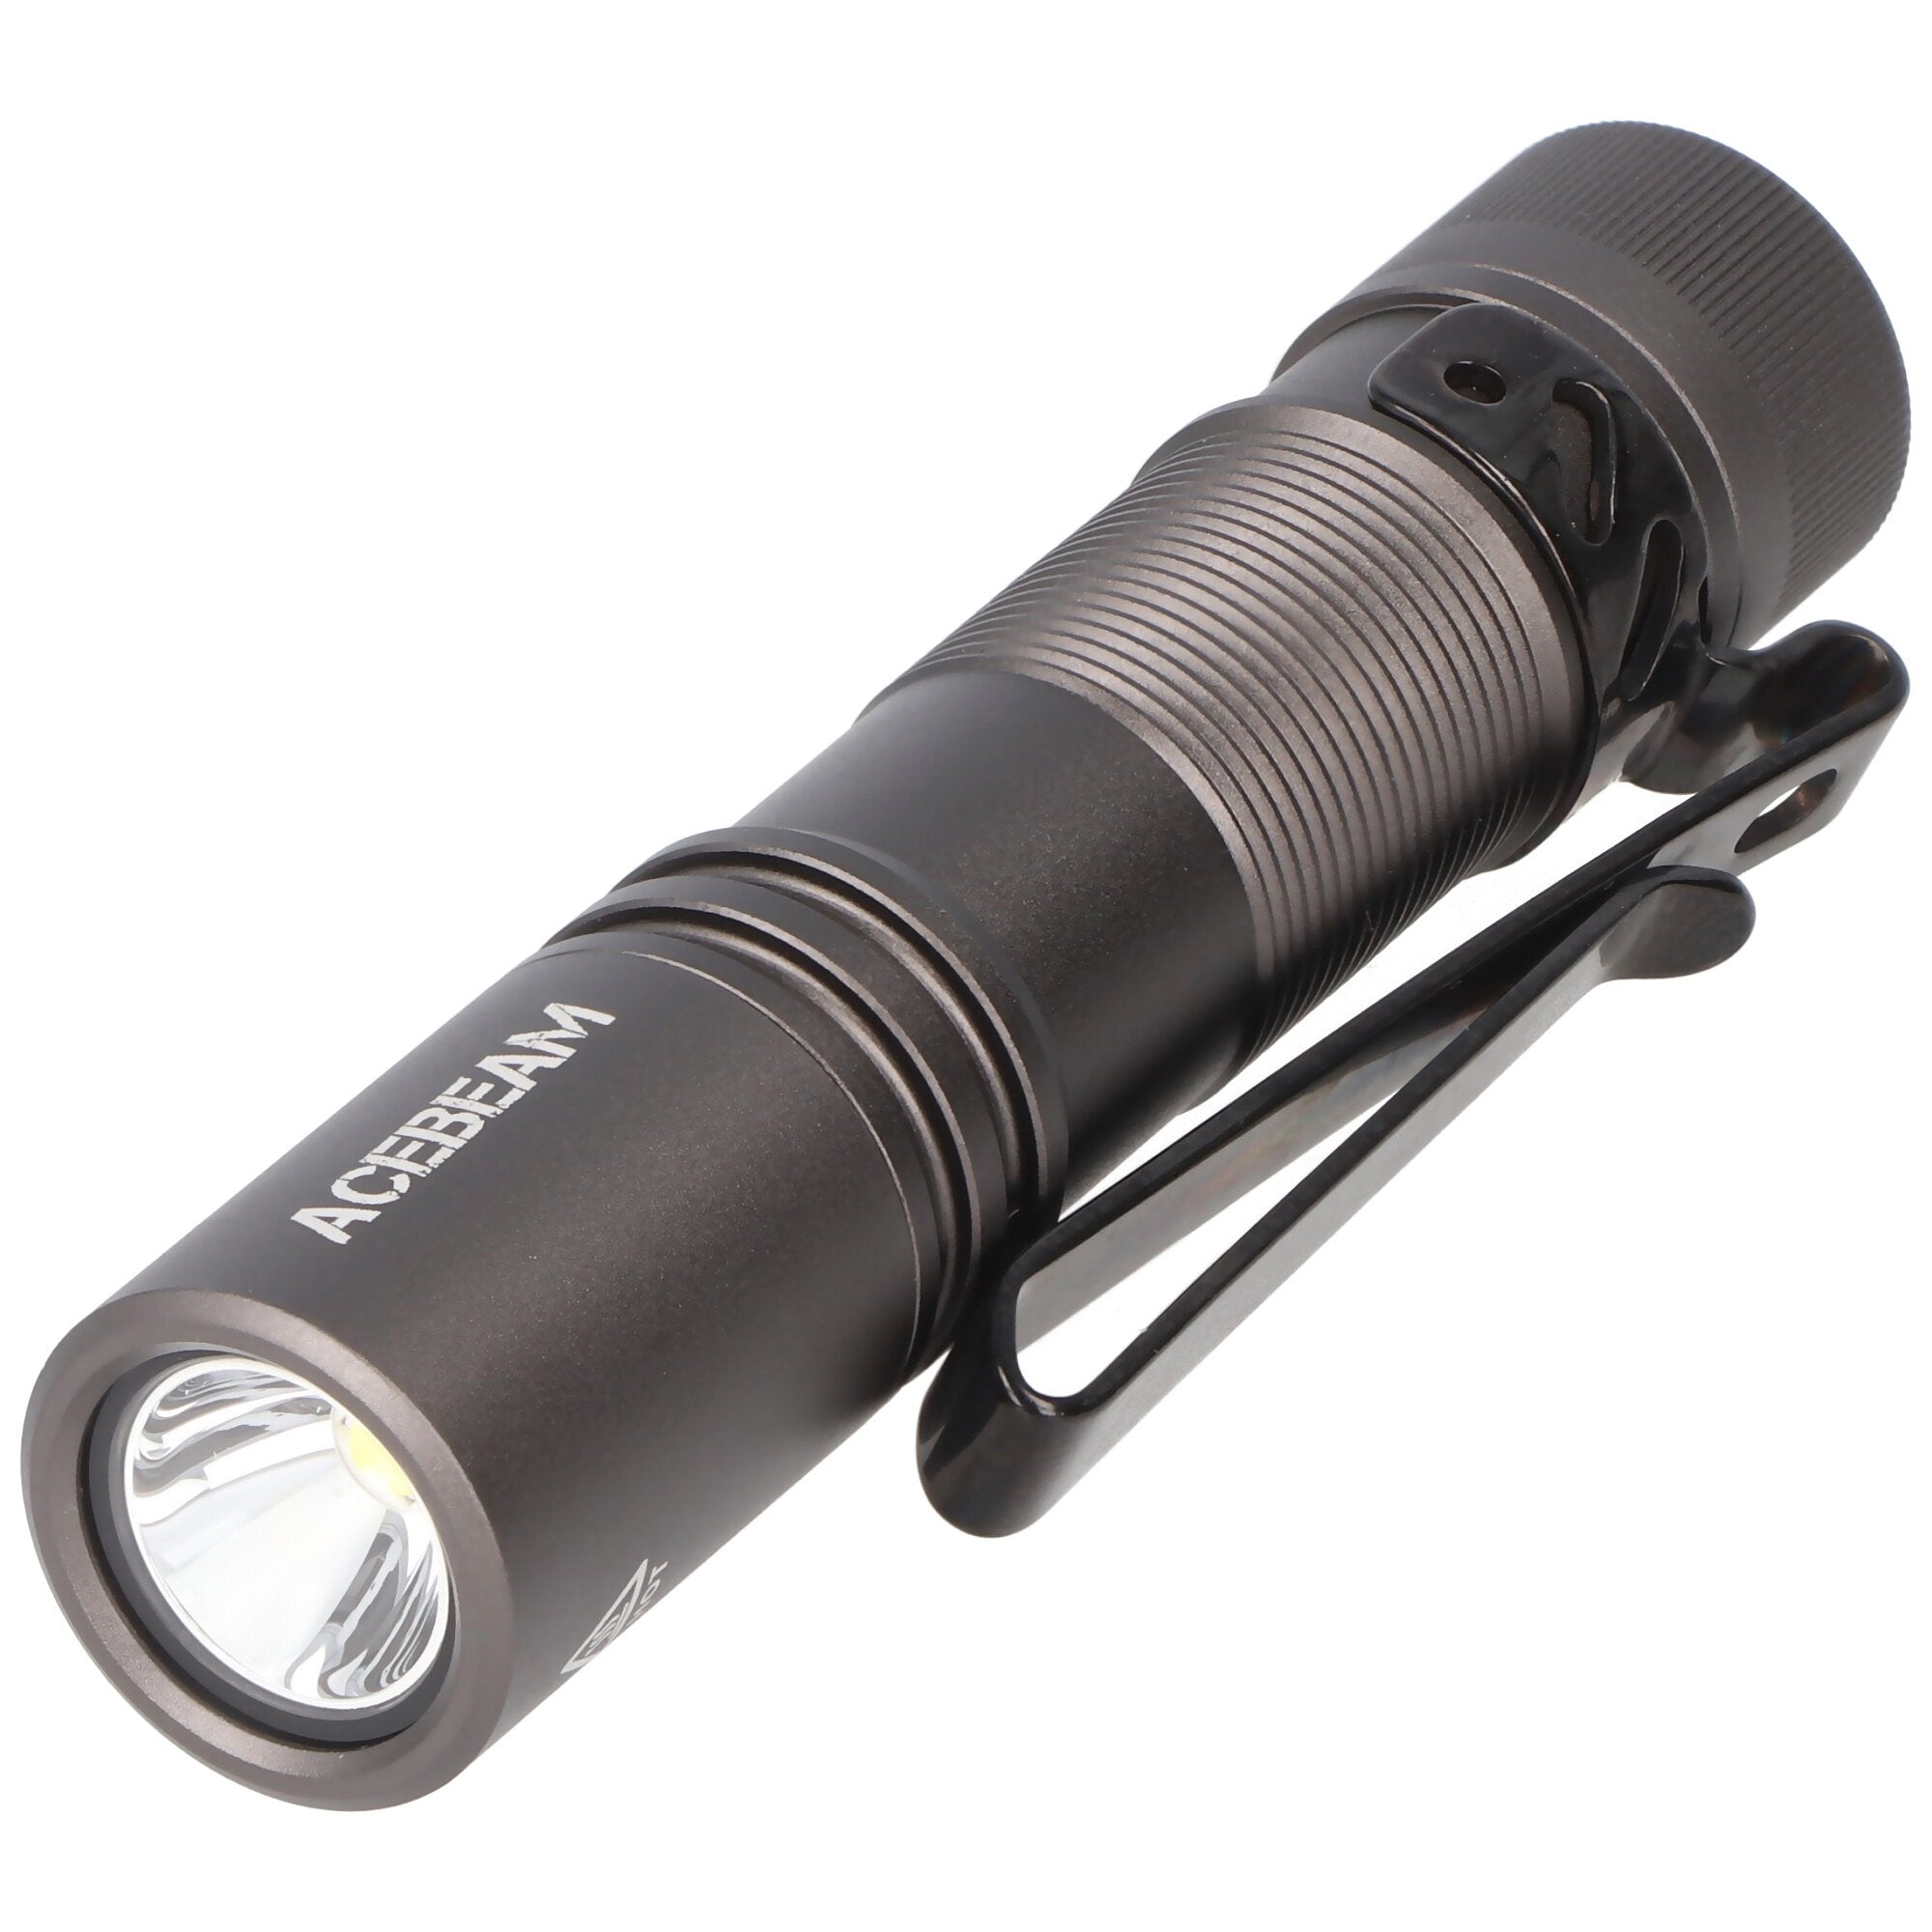 AceBeam Pokelit AA LED flashlight with up to 1,000 lumens, color grey, including 14500 Li-Ion batter